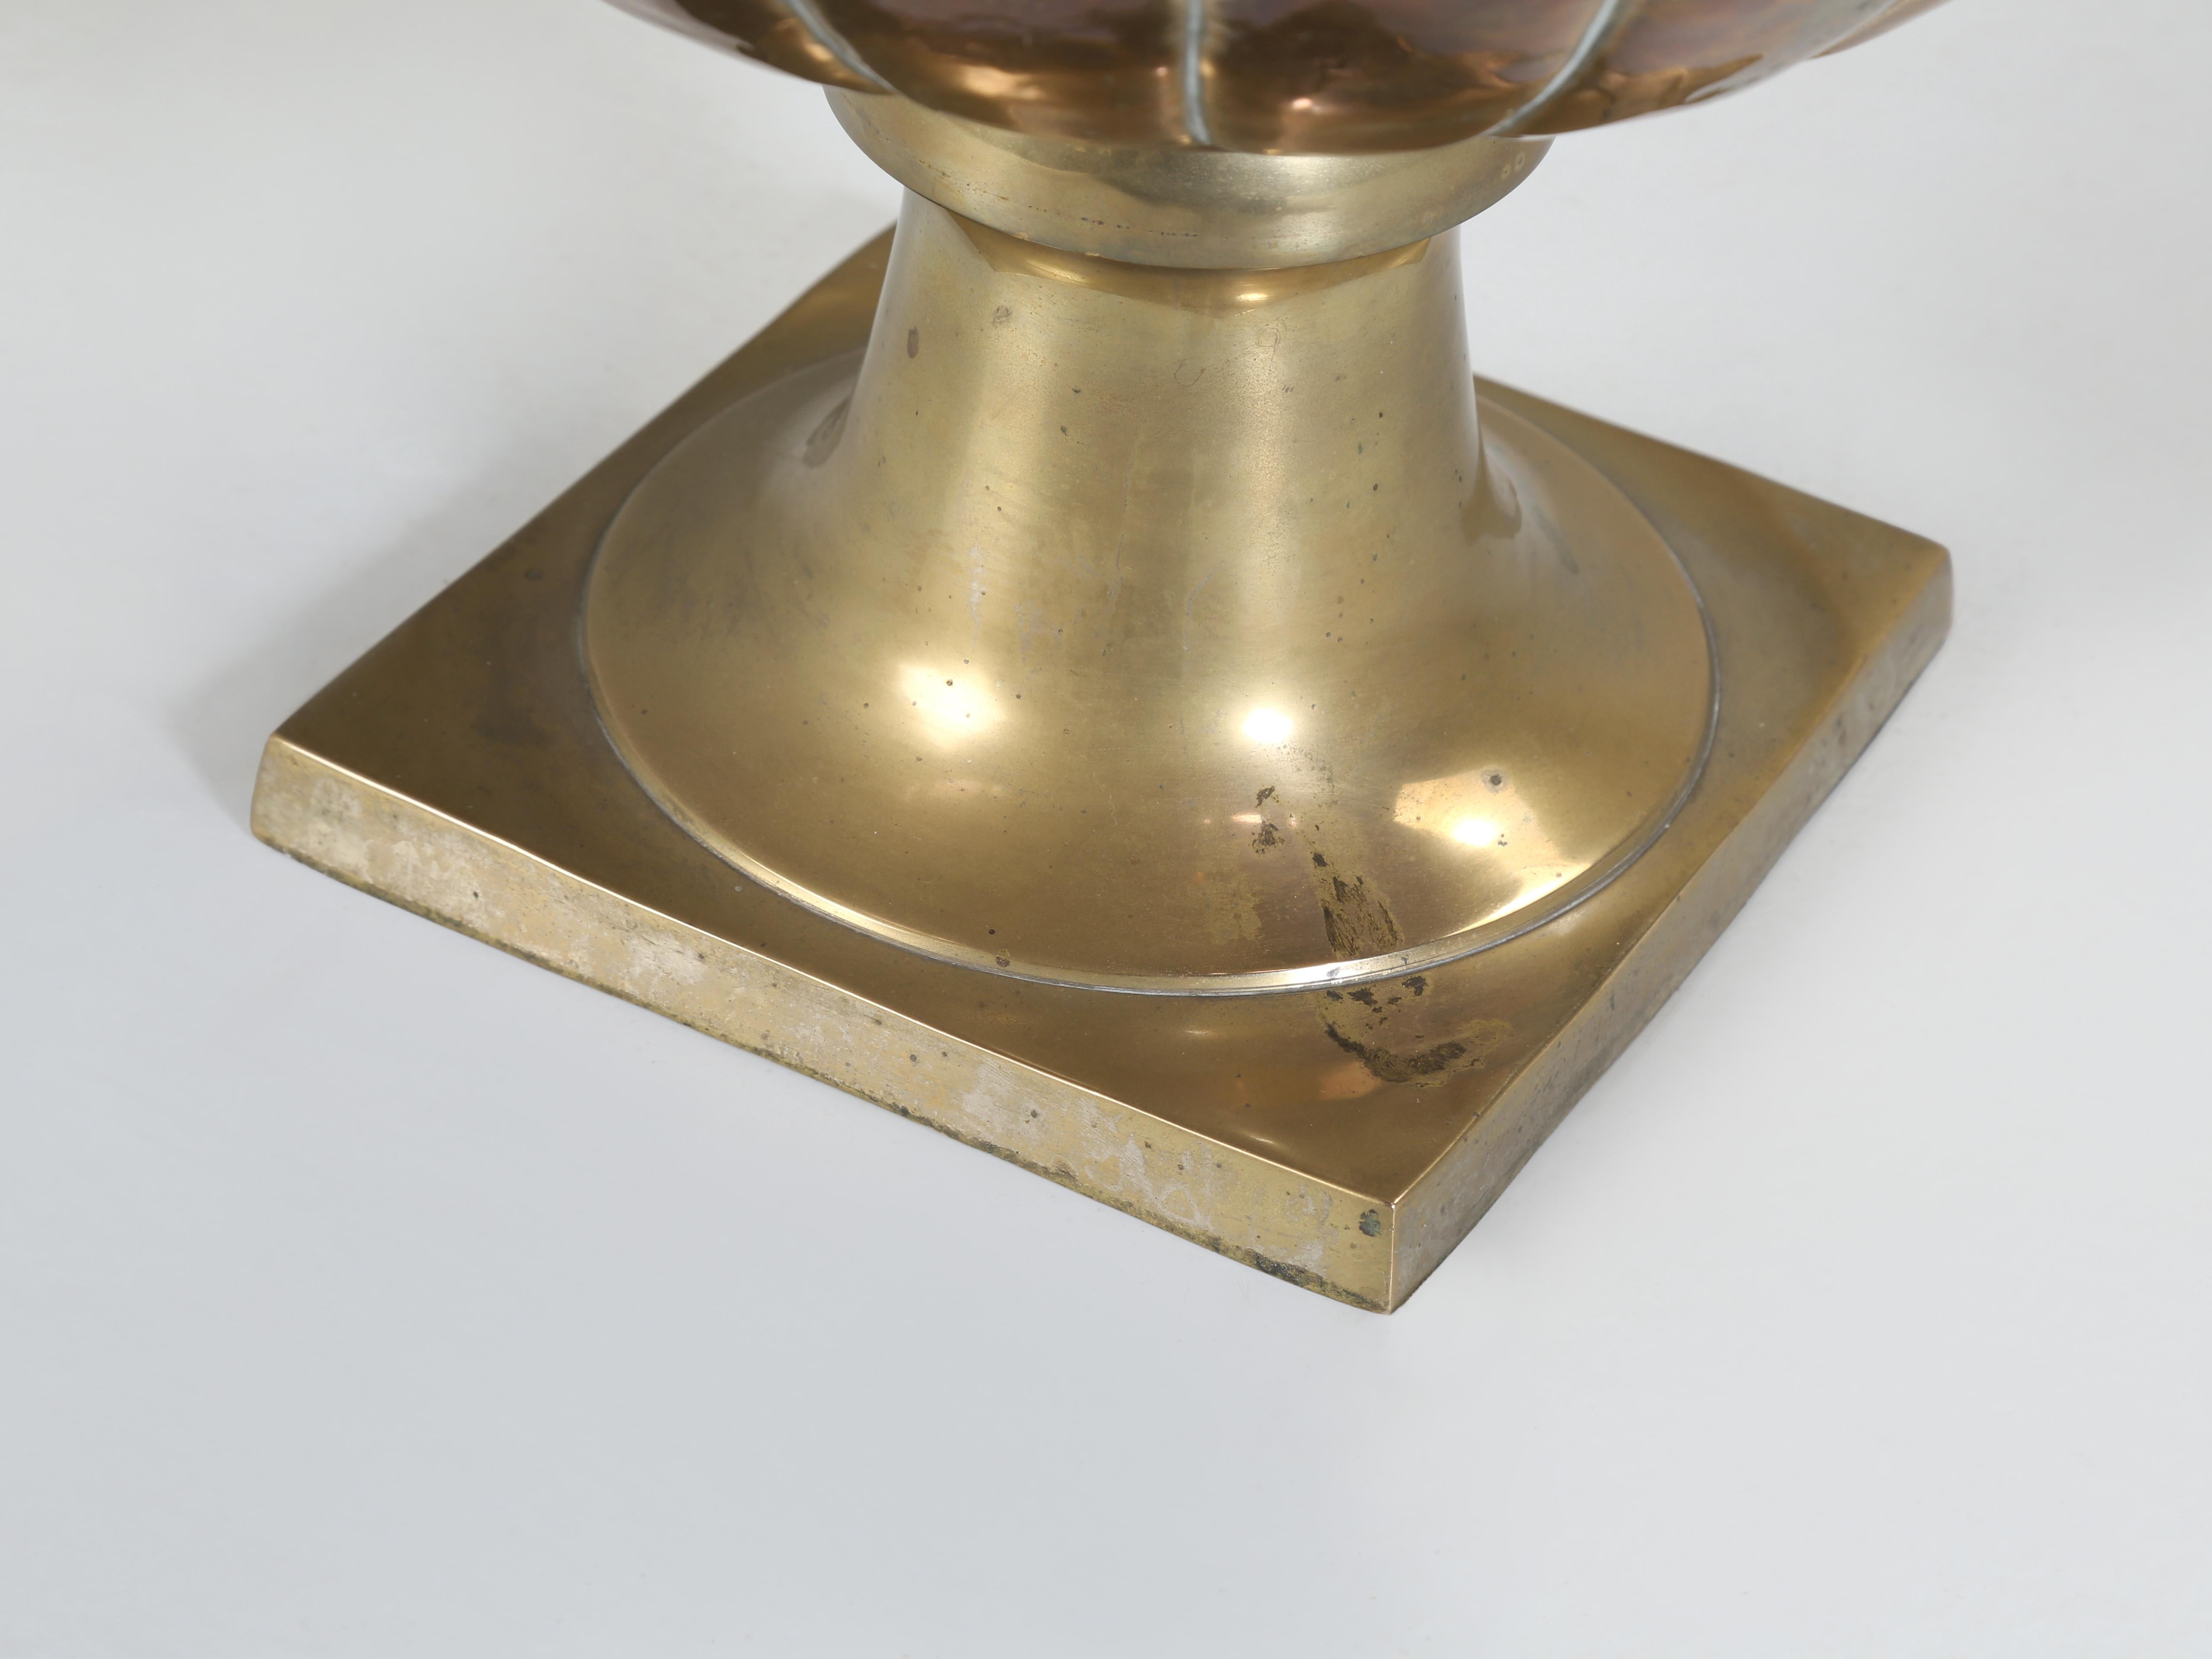 Huge Solid Brass Vase or Brass Urn Hand-Hammered Finish with Cast Brass Base  5